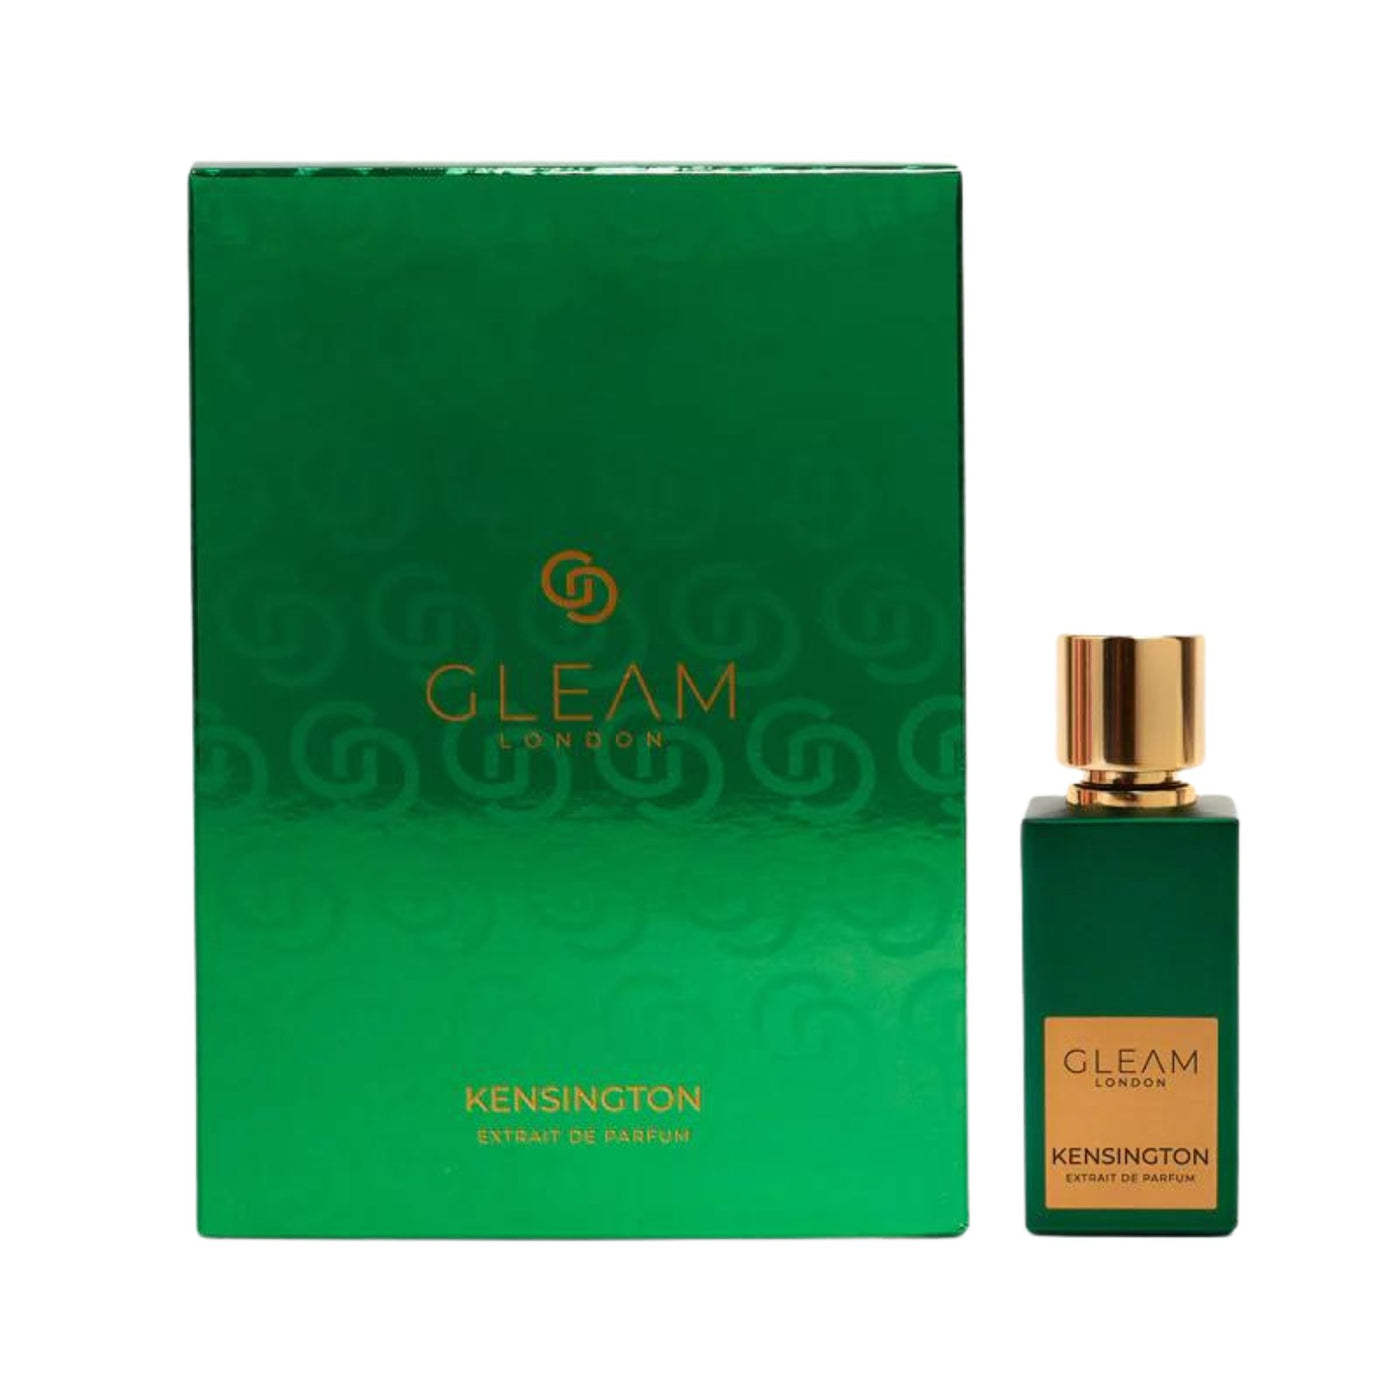 Gleam Kensington Perfume